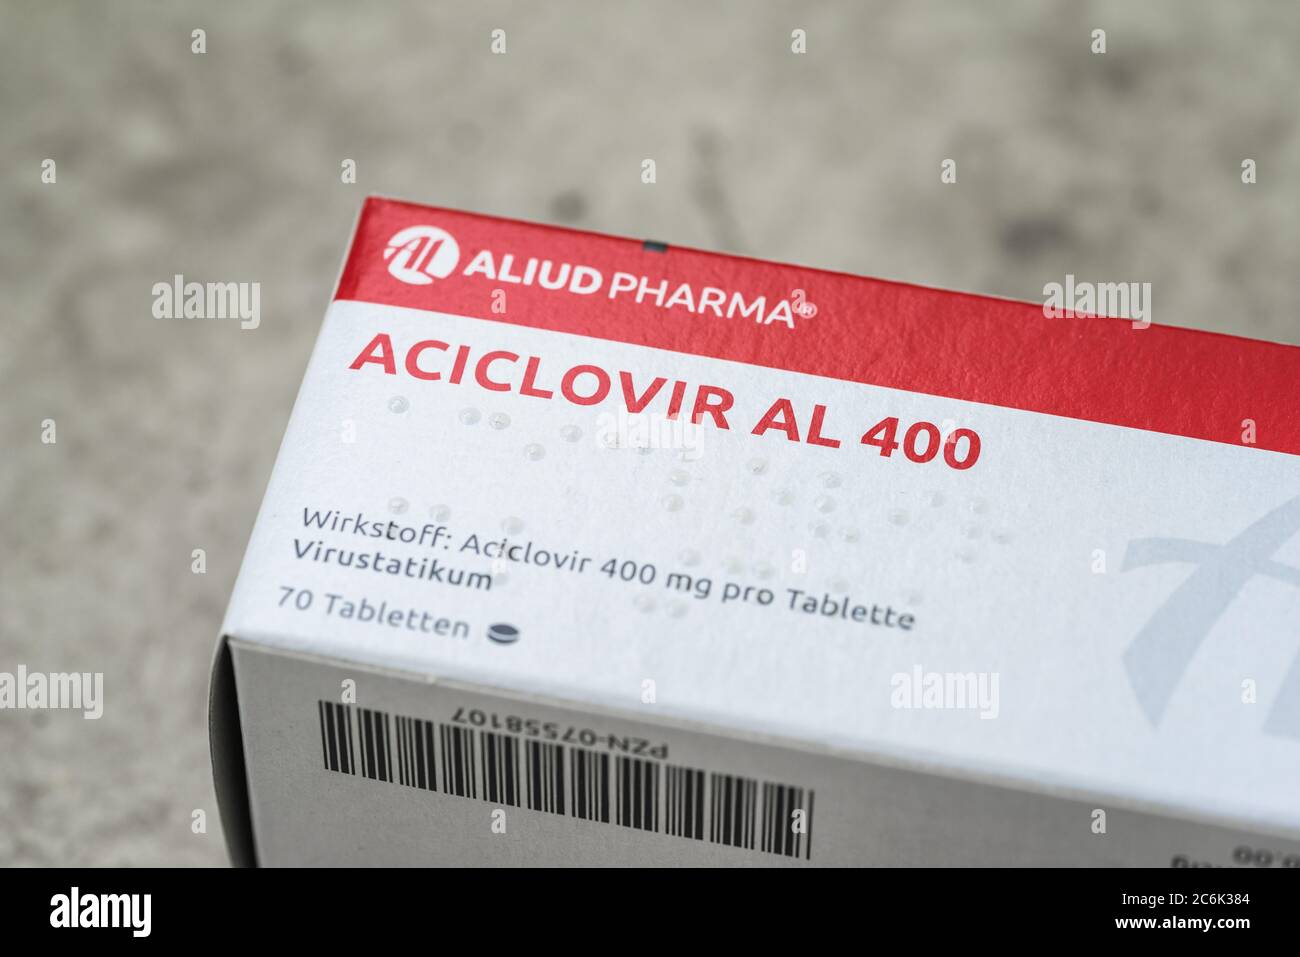 Aciclovir tablets medicine immagini e fotografie stock ad alta risoluzione  - Alamy